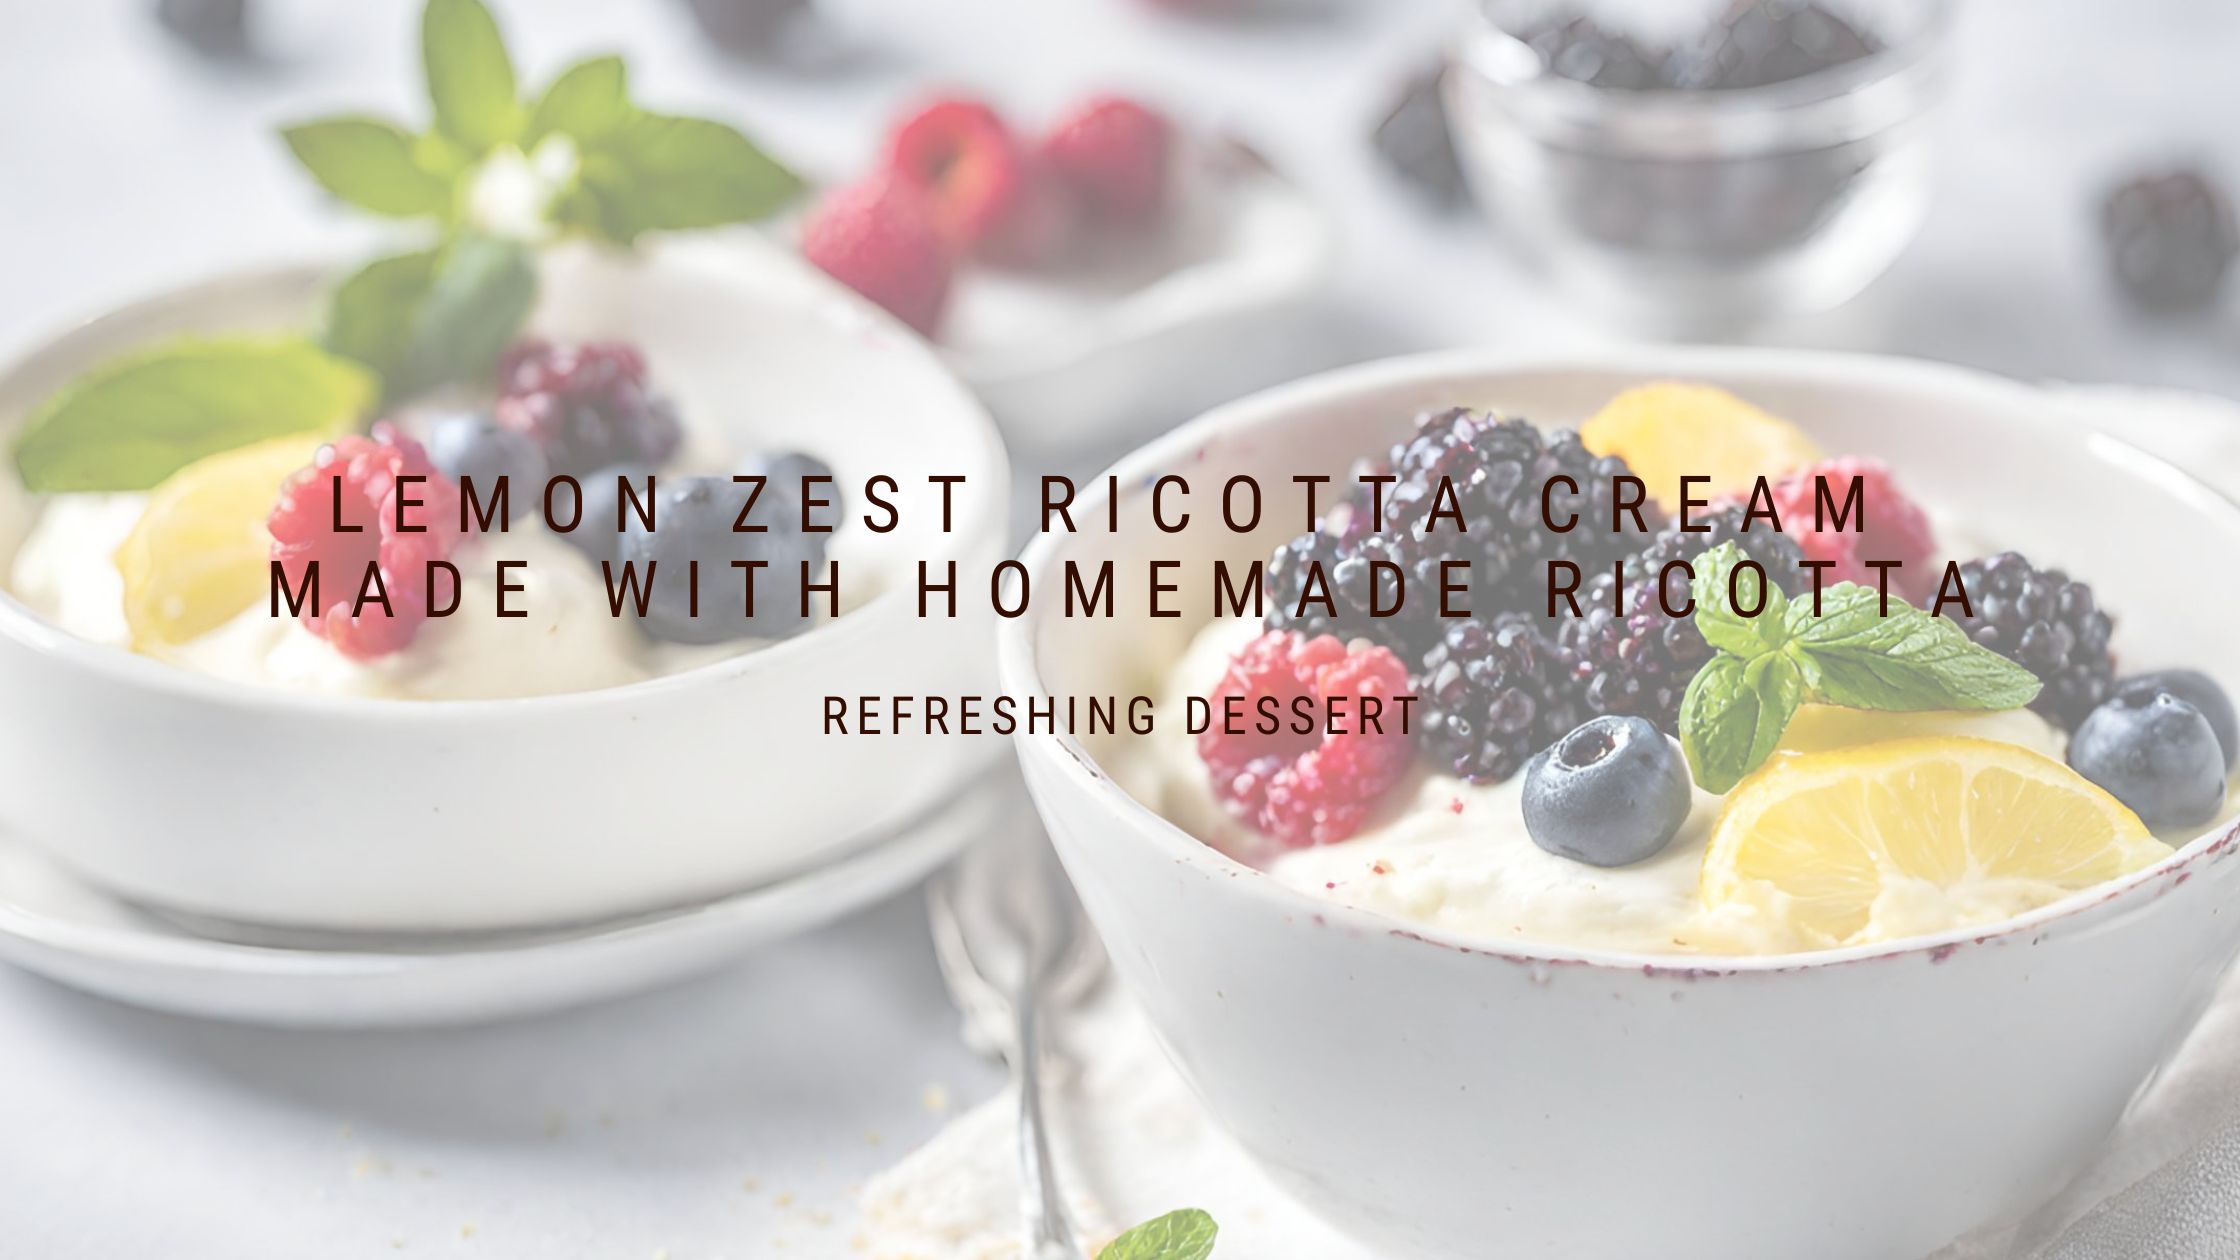 Lemon Zest Ricotta Cream made with Homemade Ricotta